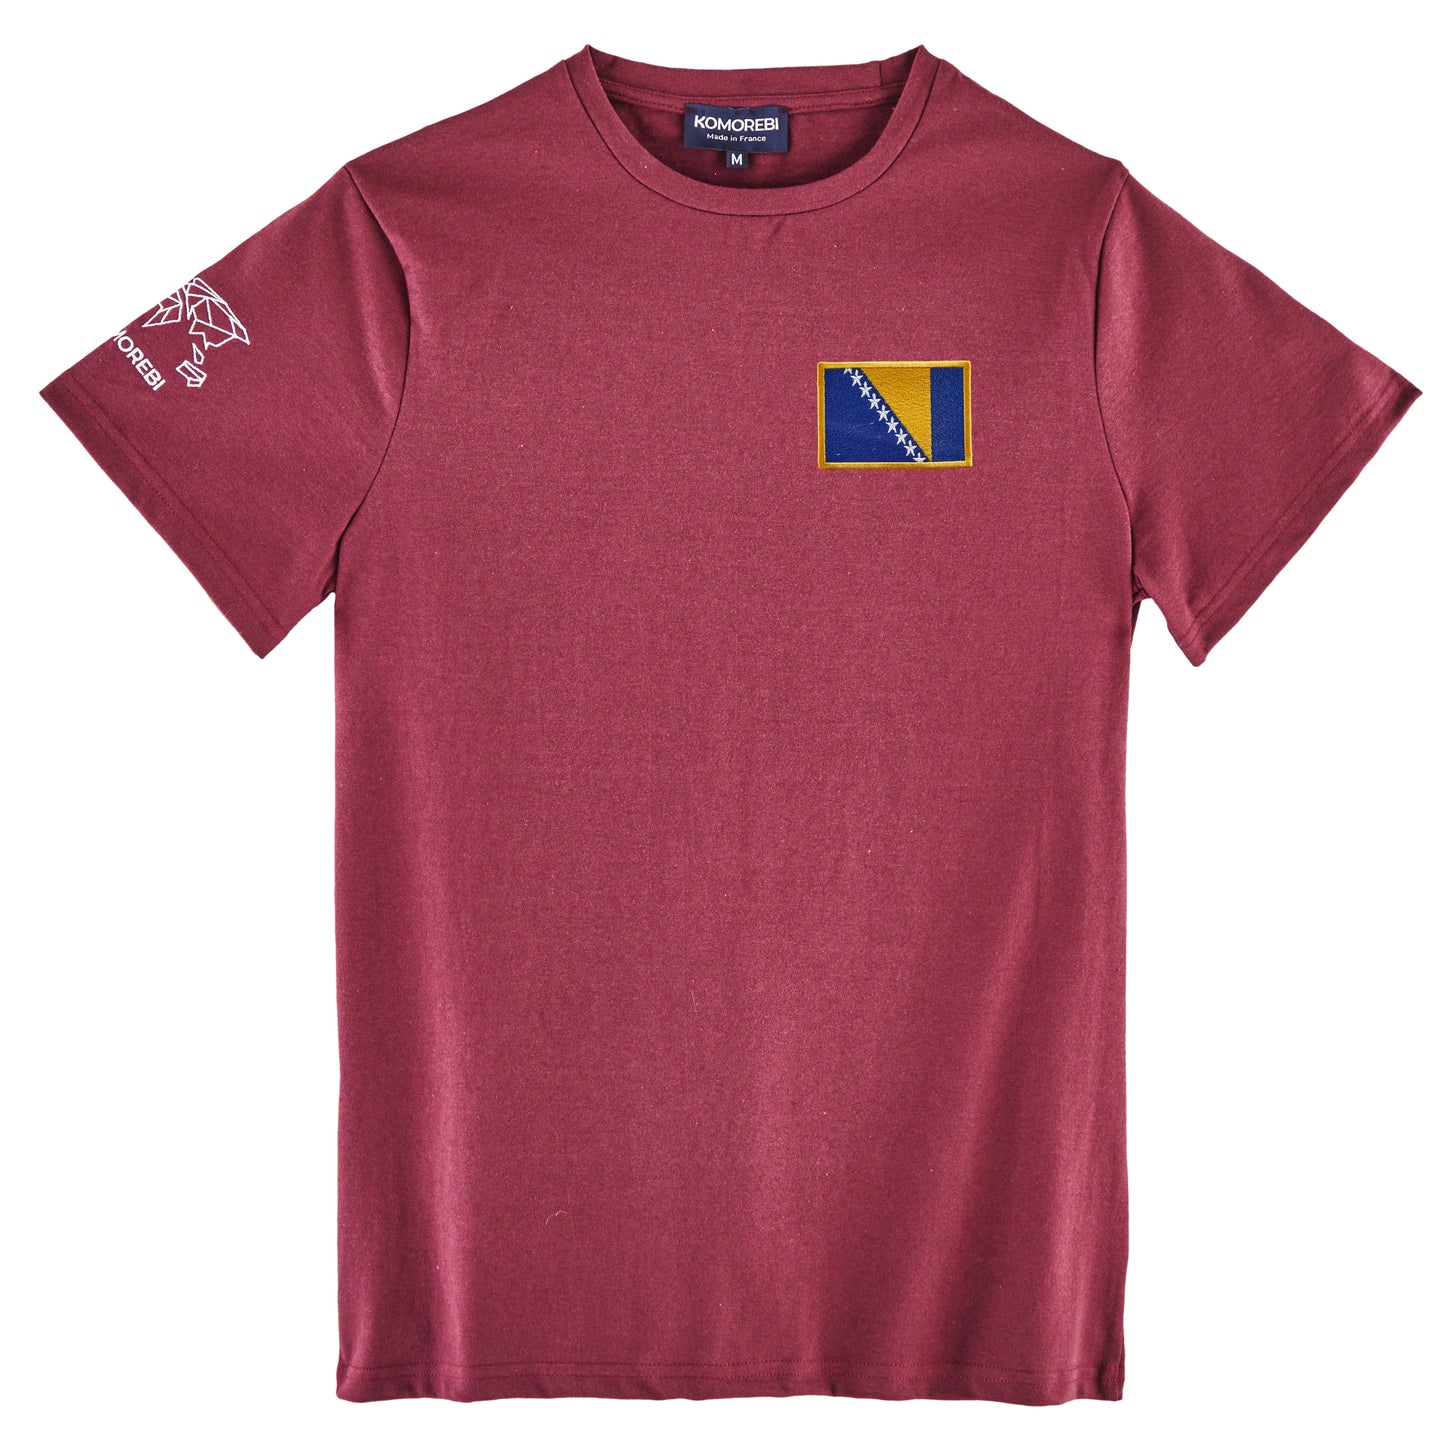 Bosnie Herzégovine • T-shirt